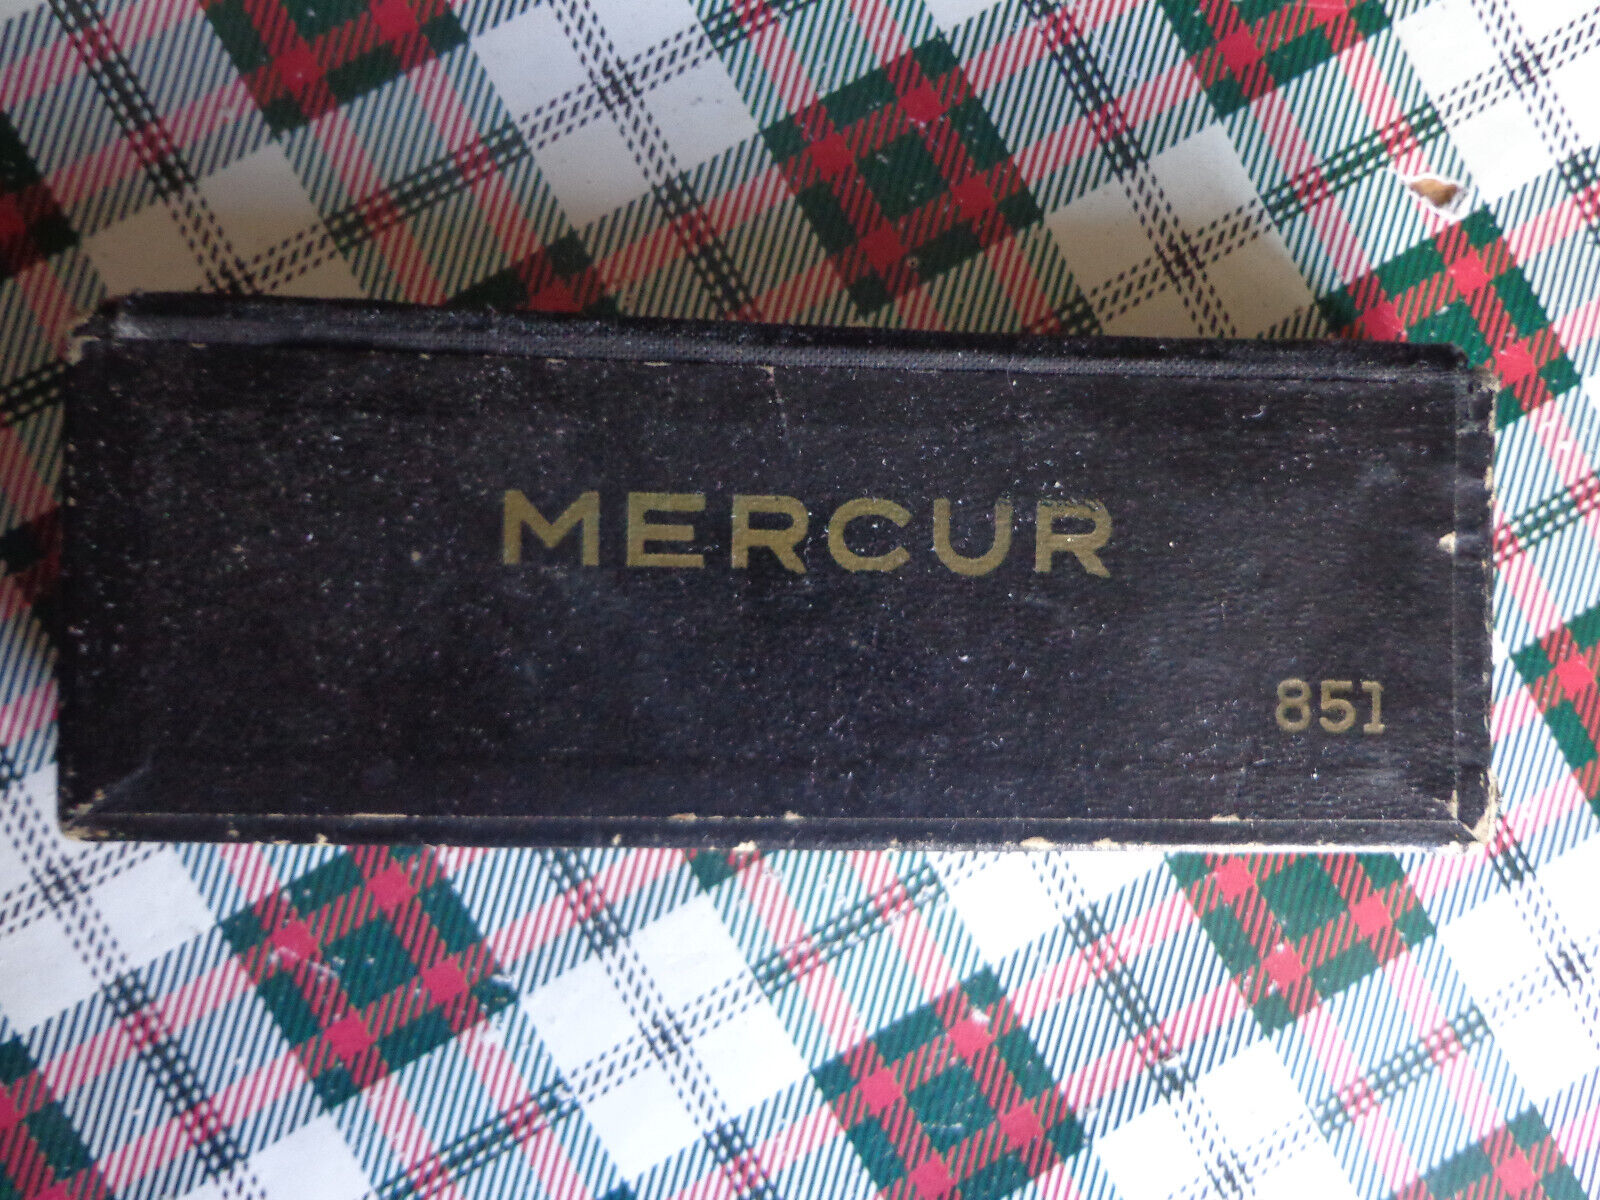 Vintage Mercur 851 Drafting Compass Set with Original Case